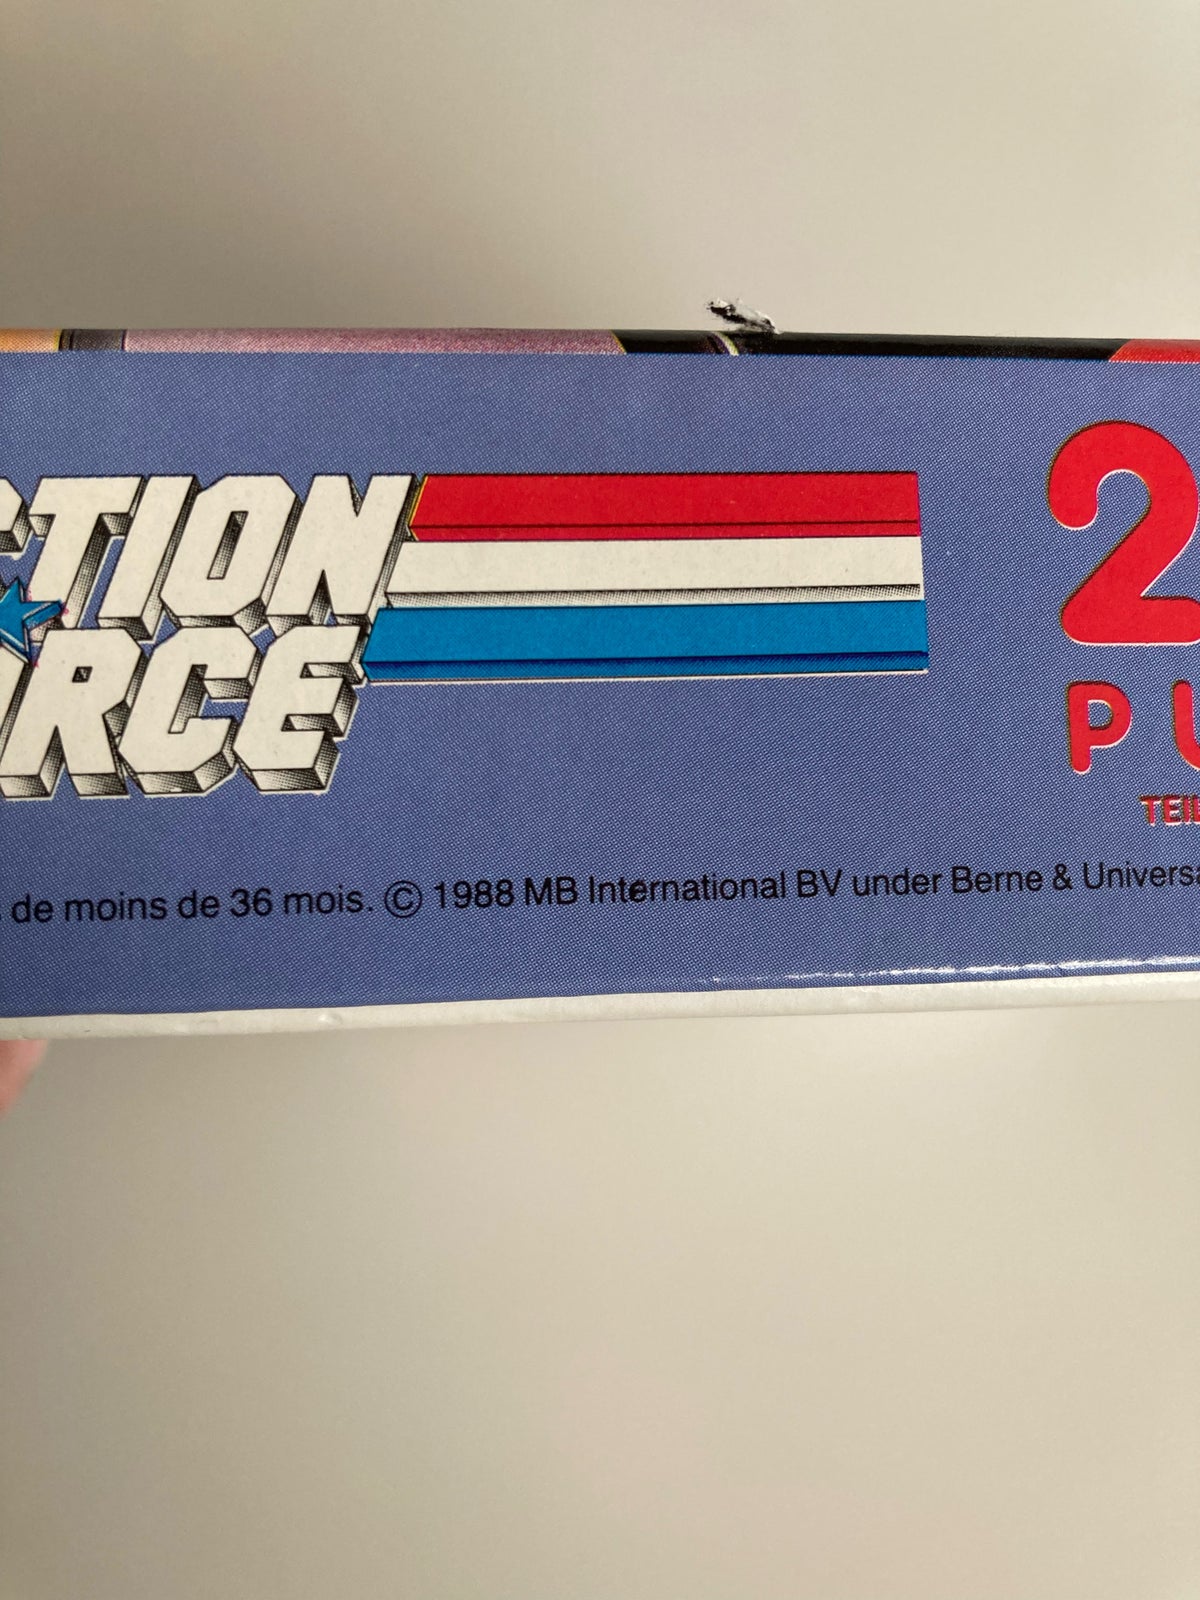 G.I. Joe, Action Force , puslespil